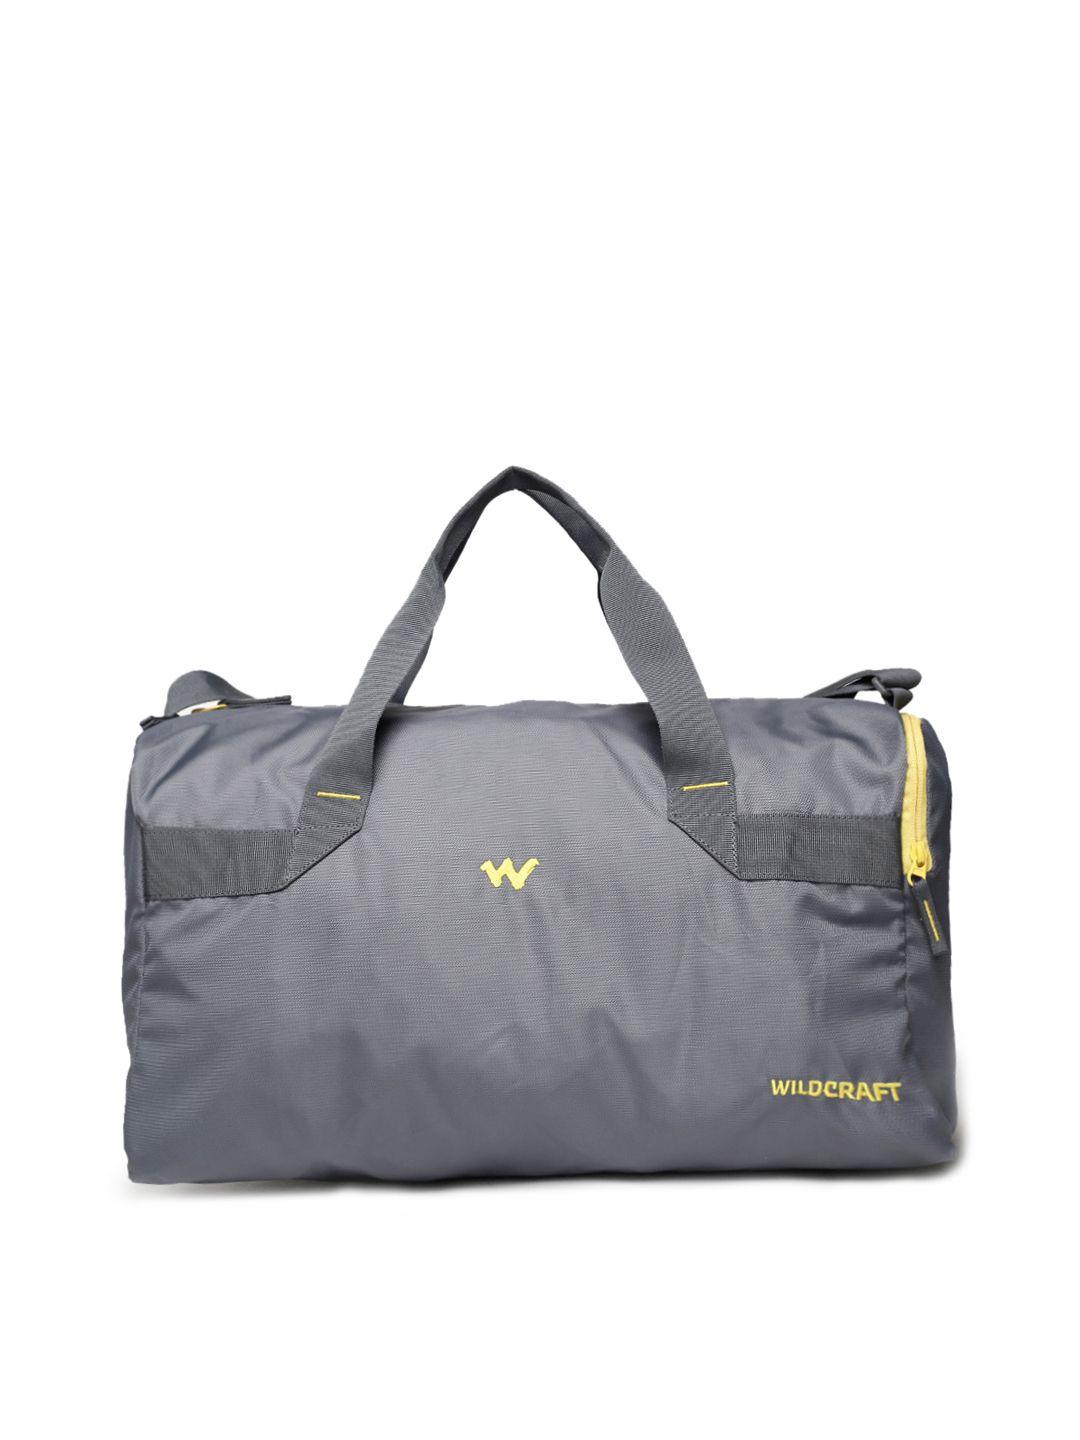 Wildcraft Unisex Grey Tour Duffle Bag